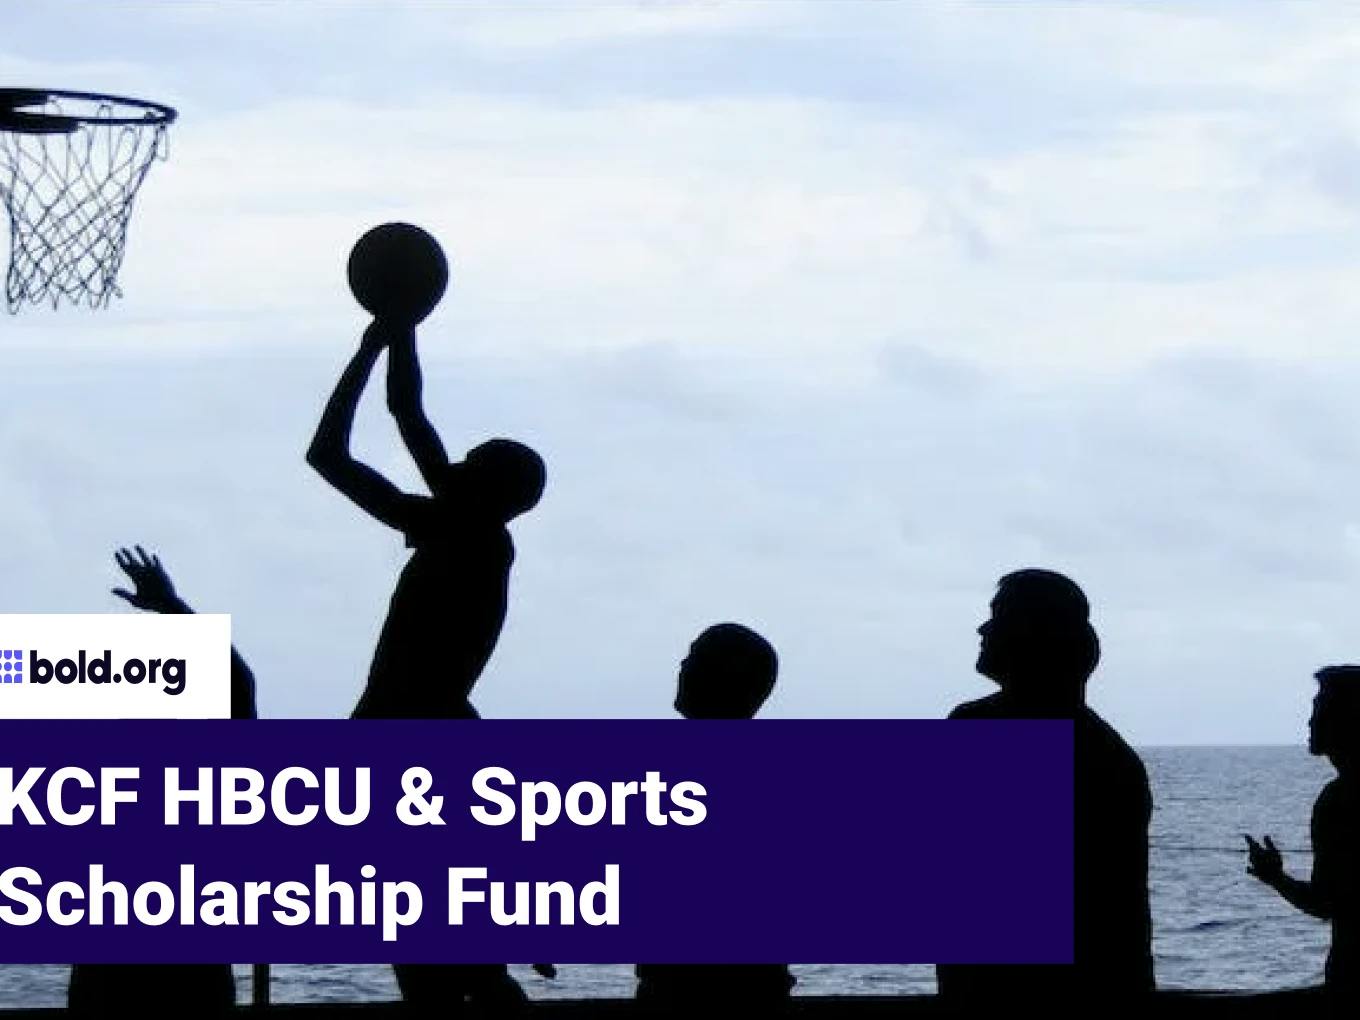 KCF HBCU & Sports Scholarship Fund